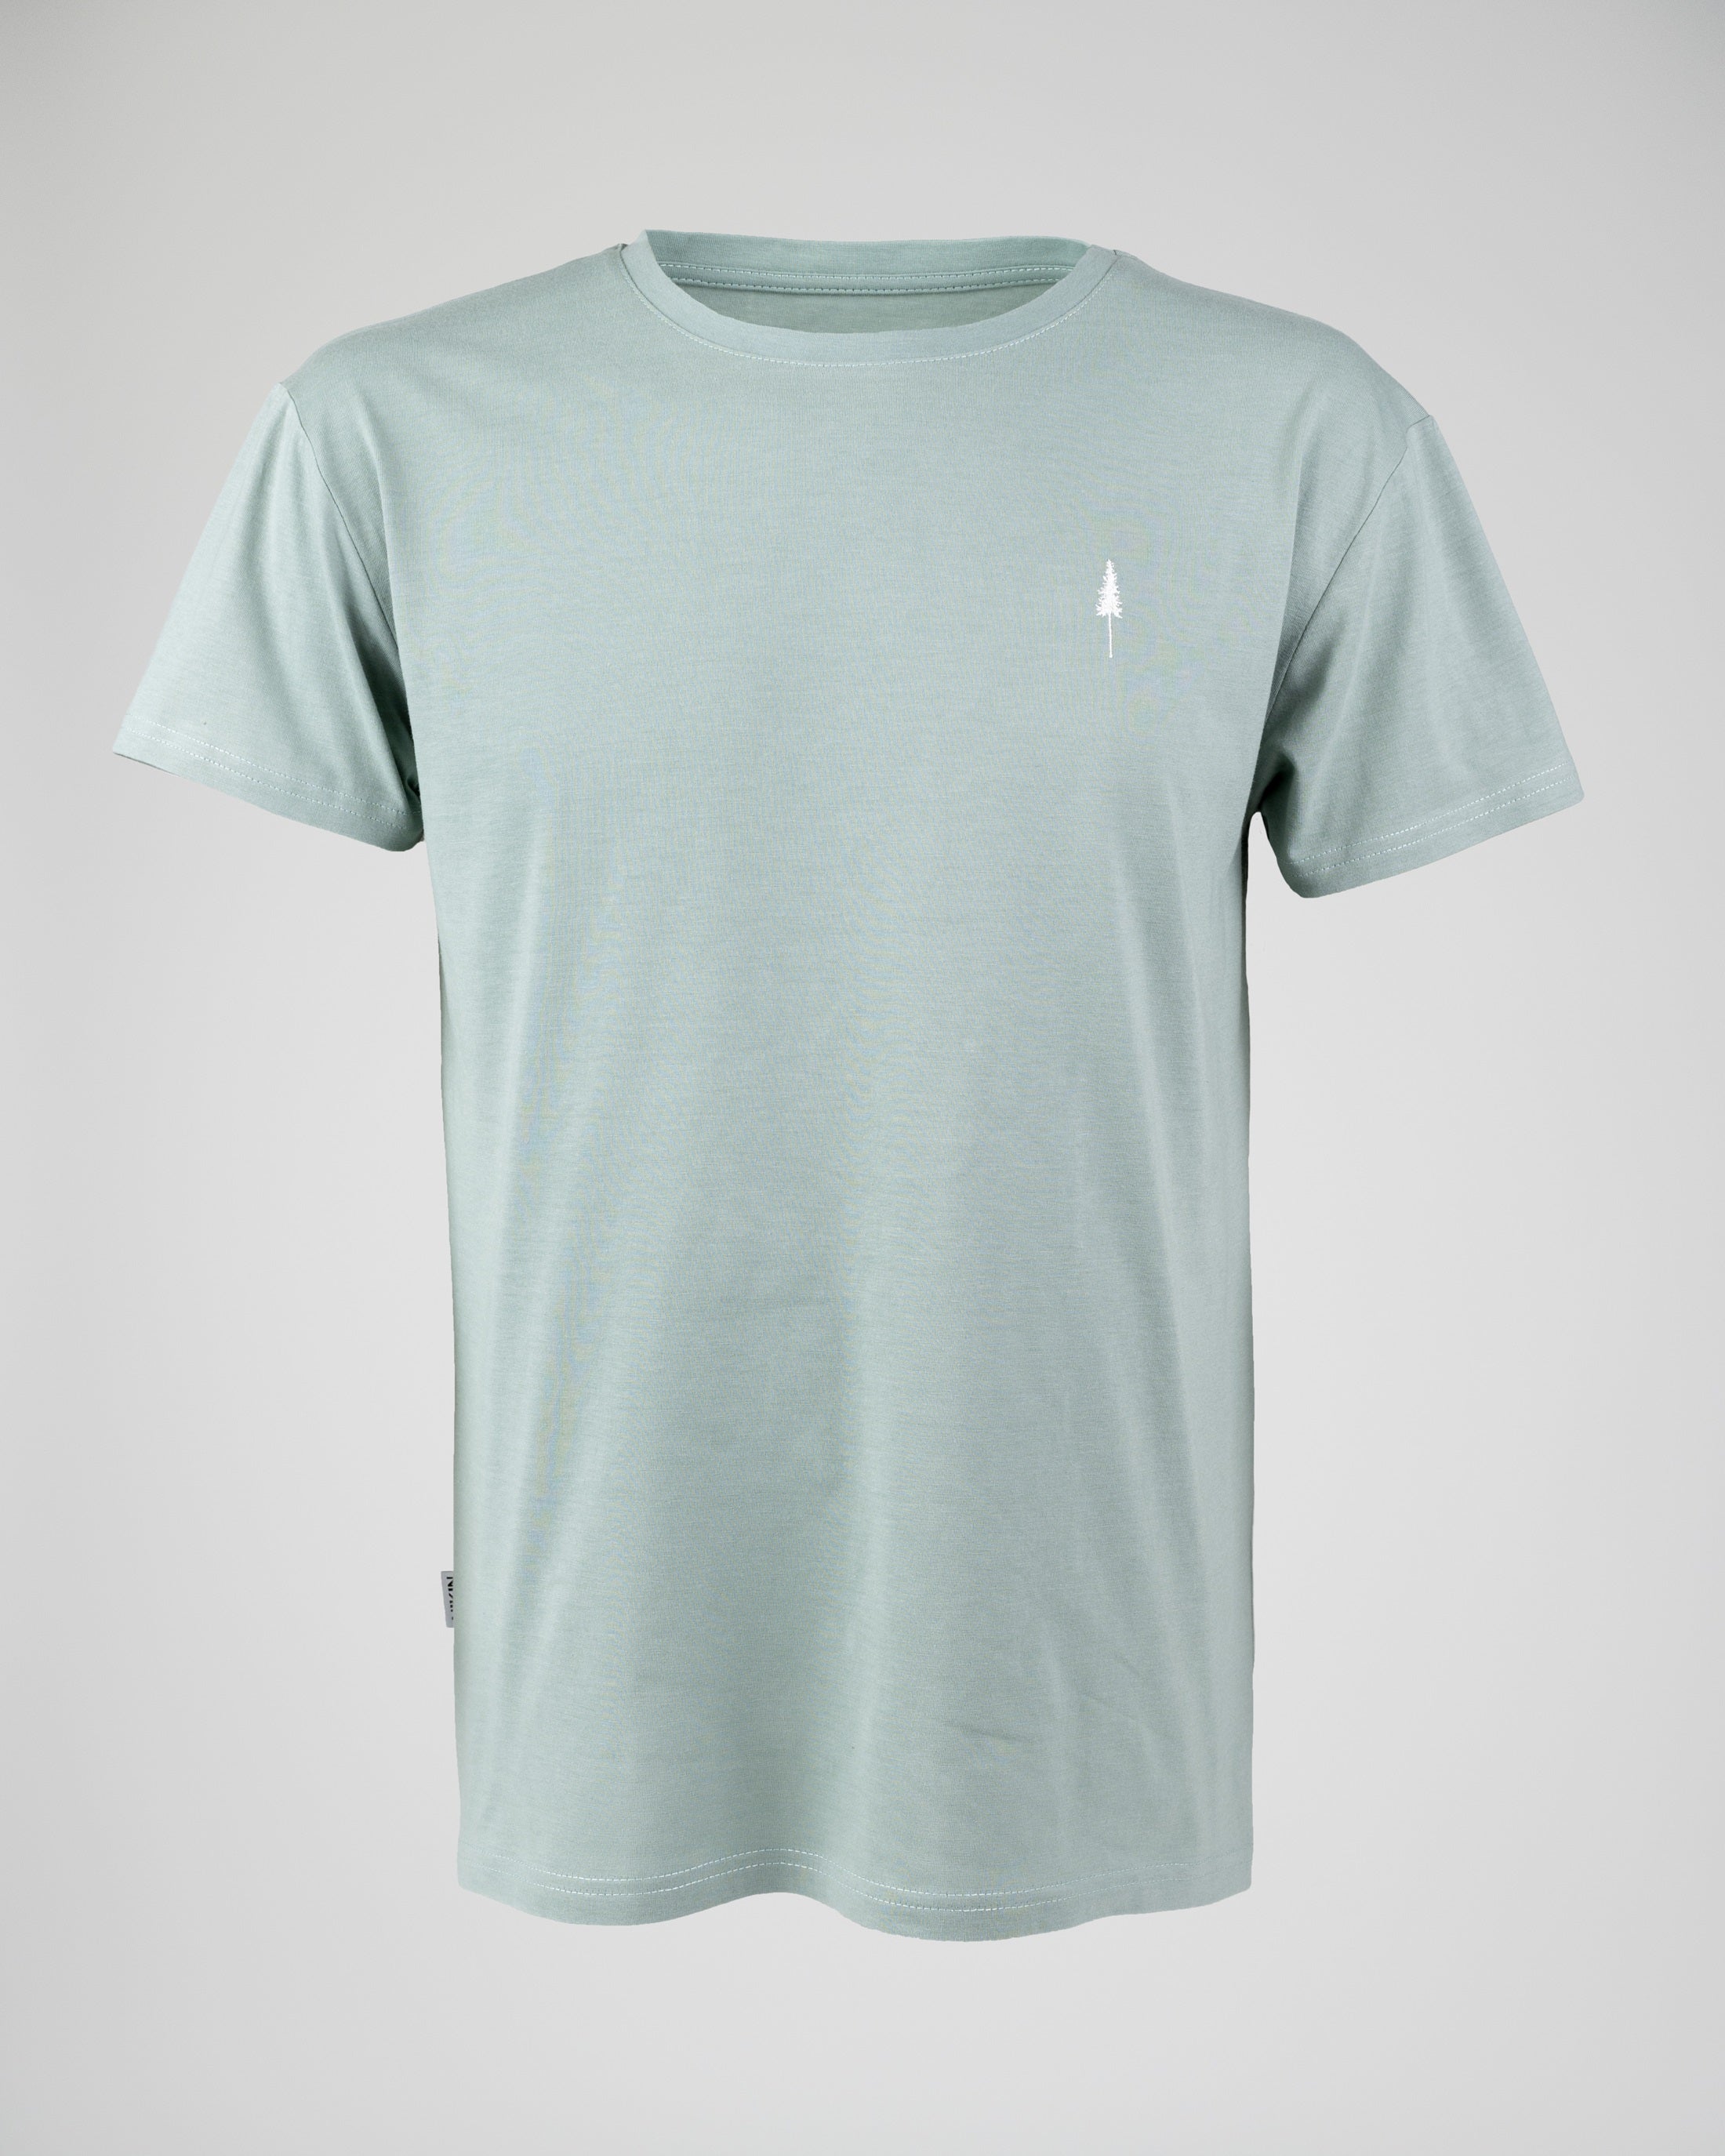 Men's organic cotton T-shirt Treeshirt Turquoise